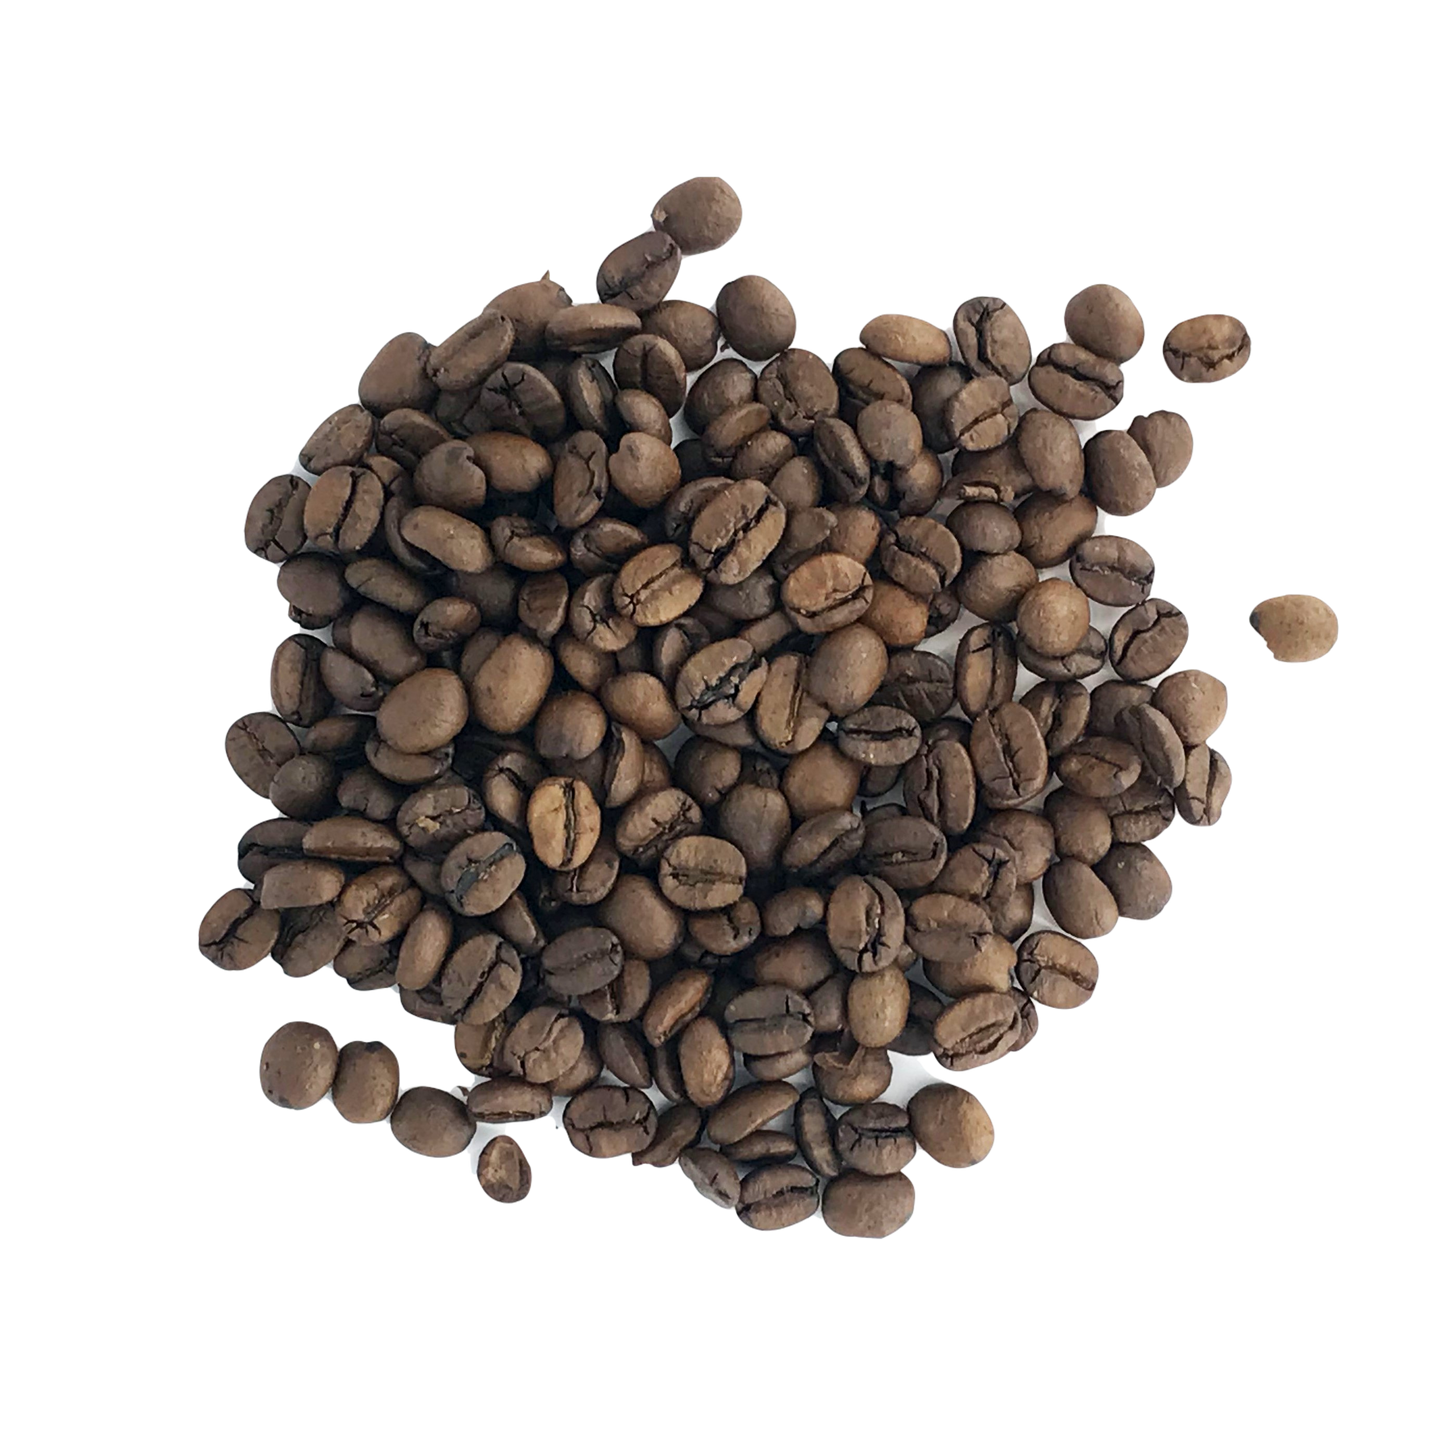 Koffie Cardamom